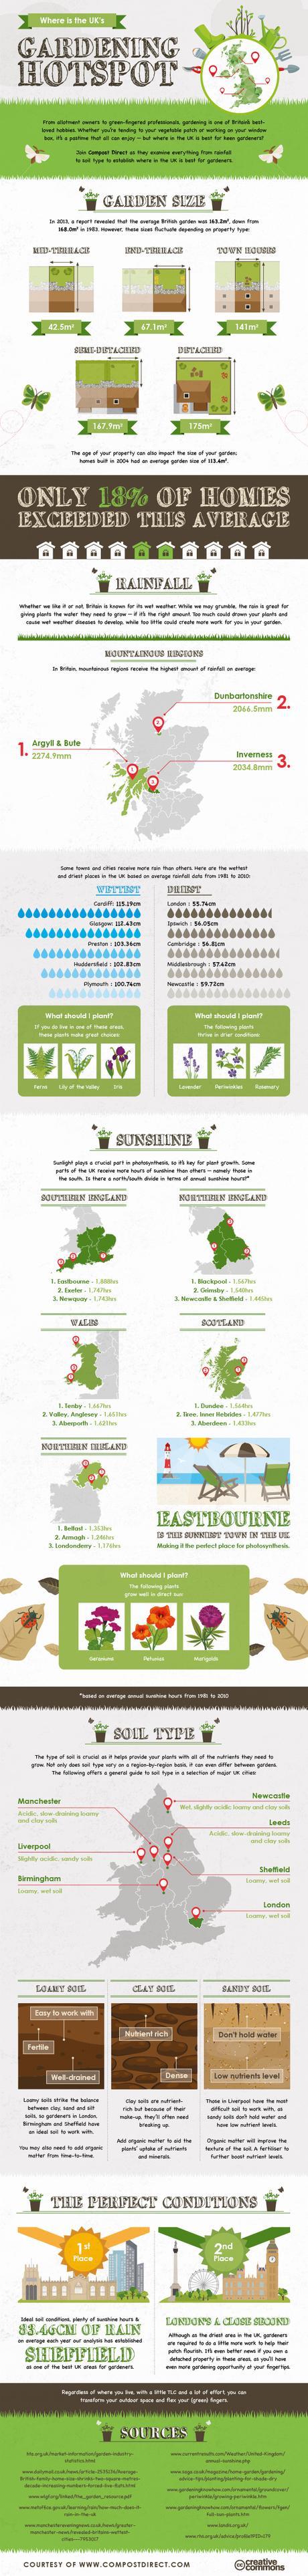 gardening hotspots infographic